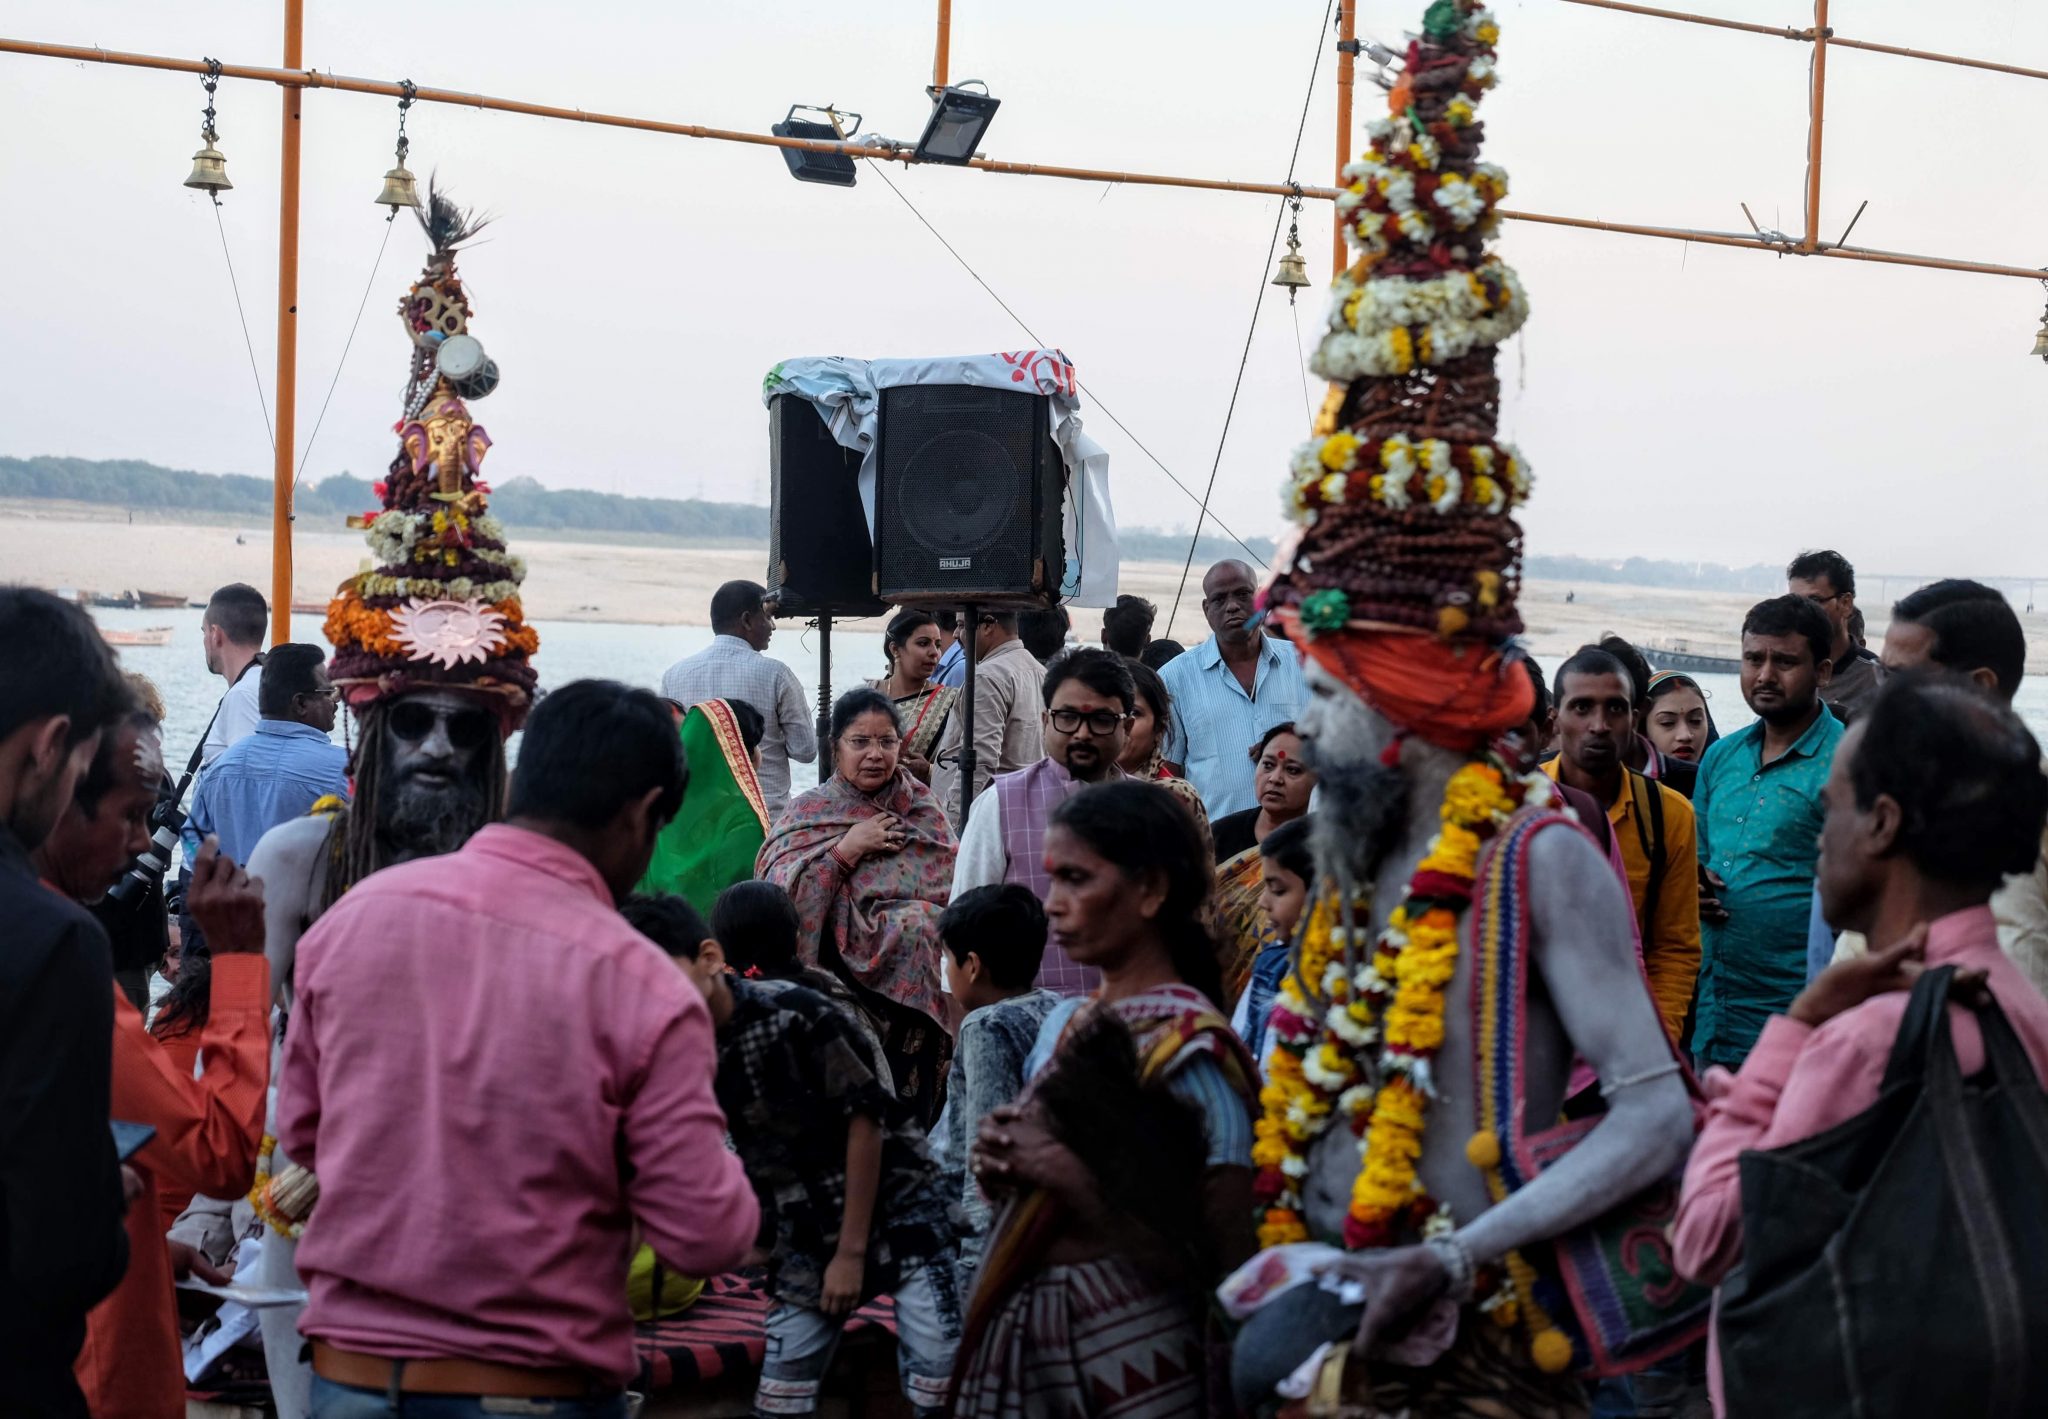 Holy men in Varanasi, India